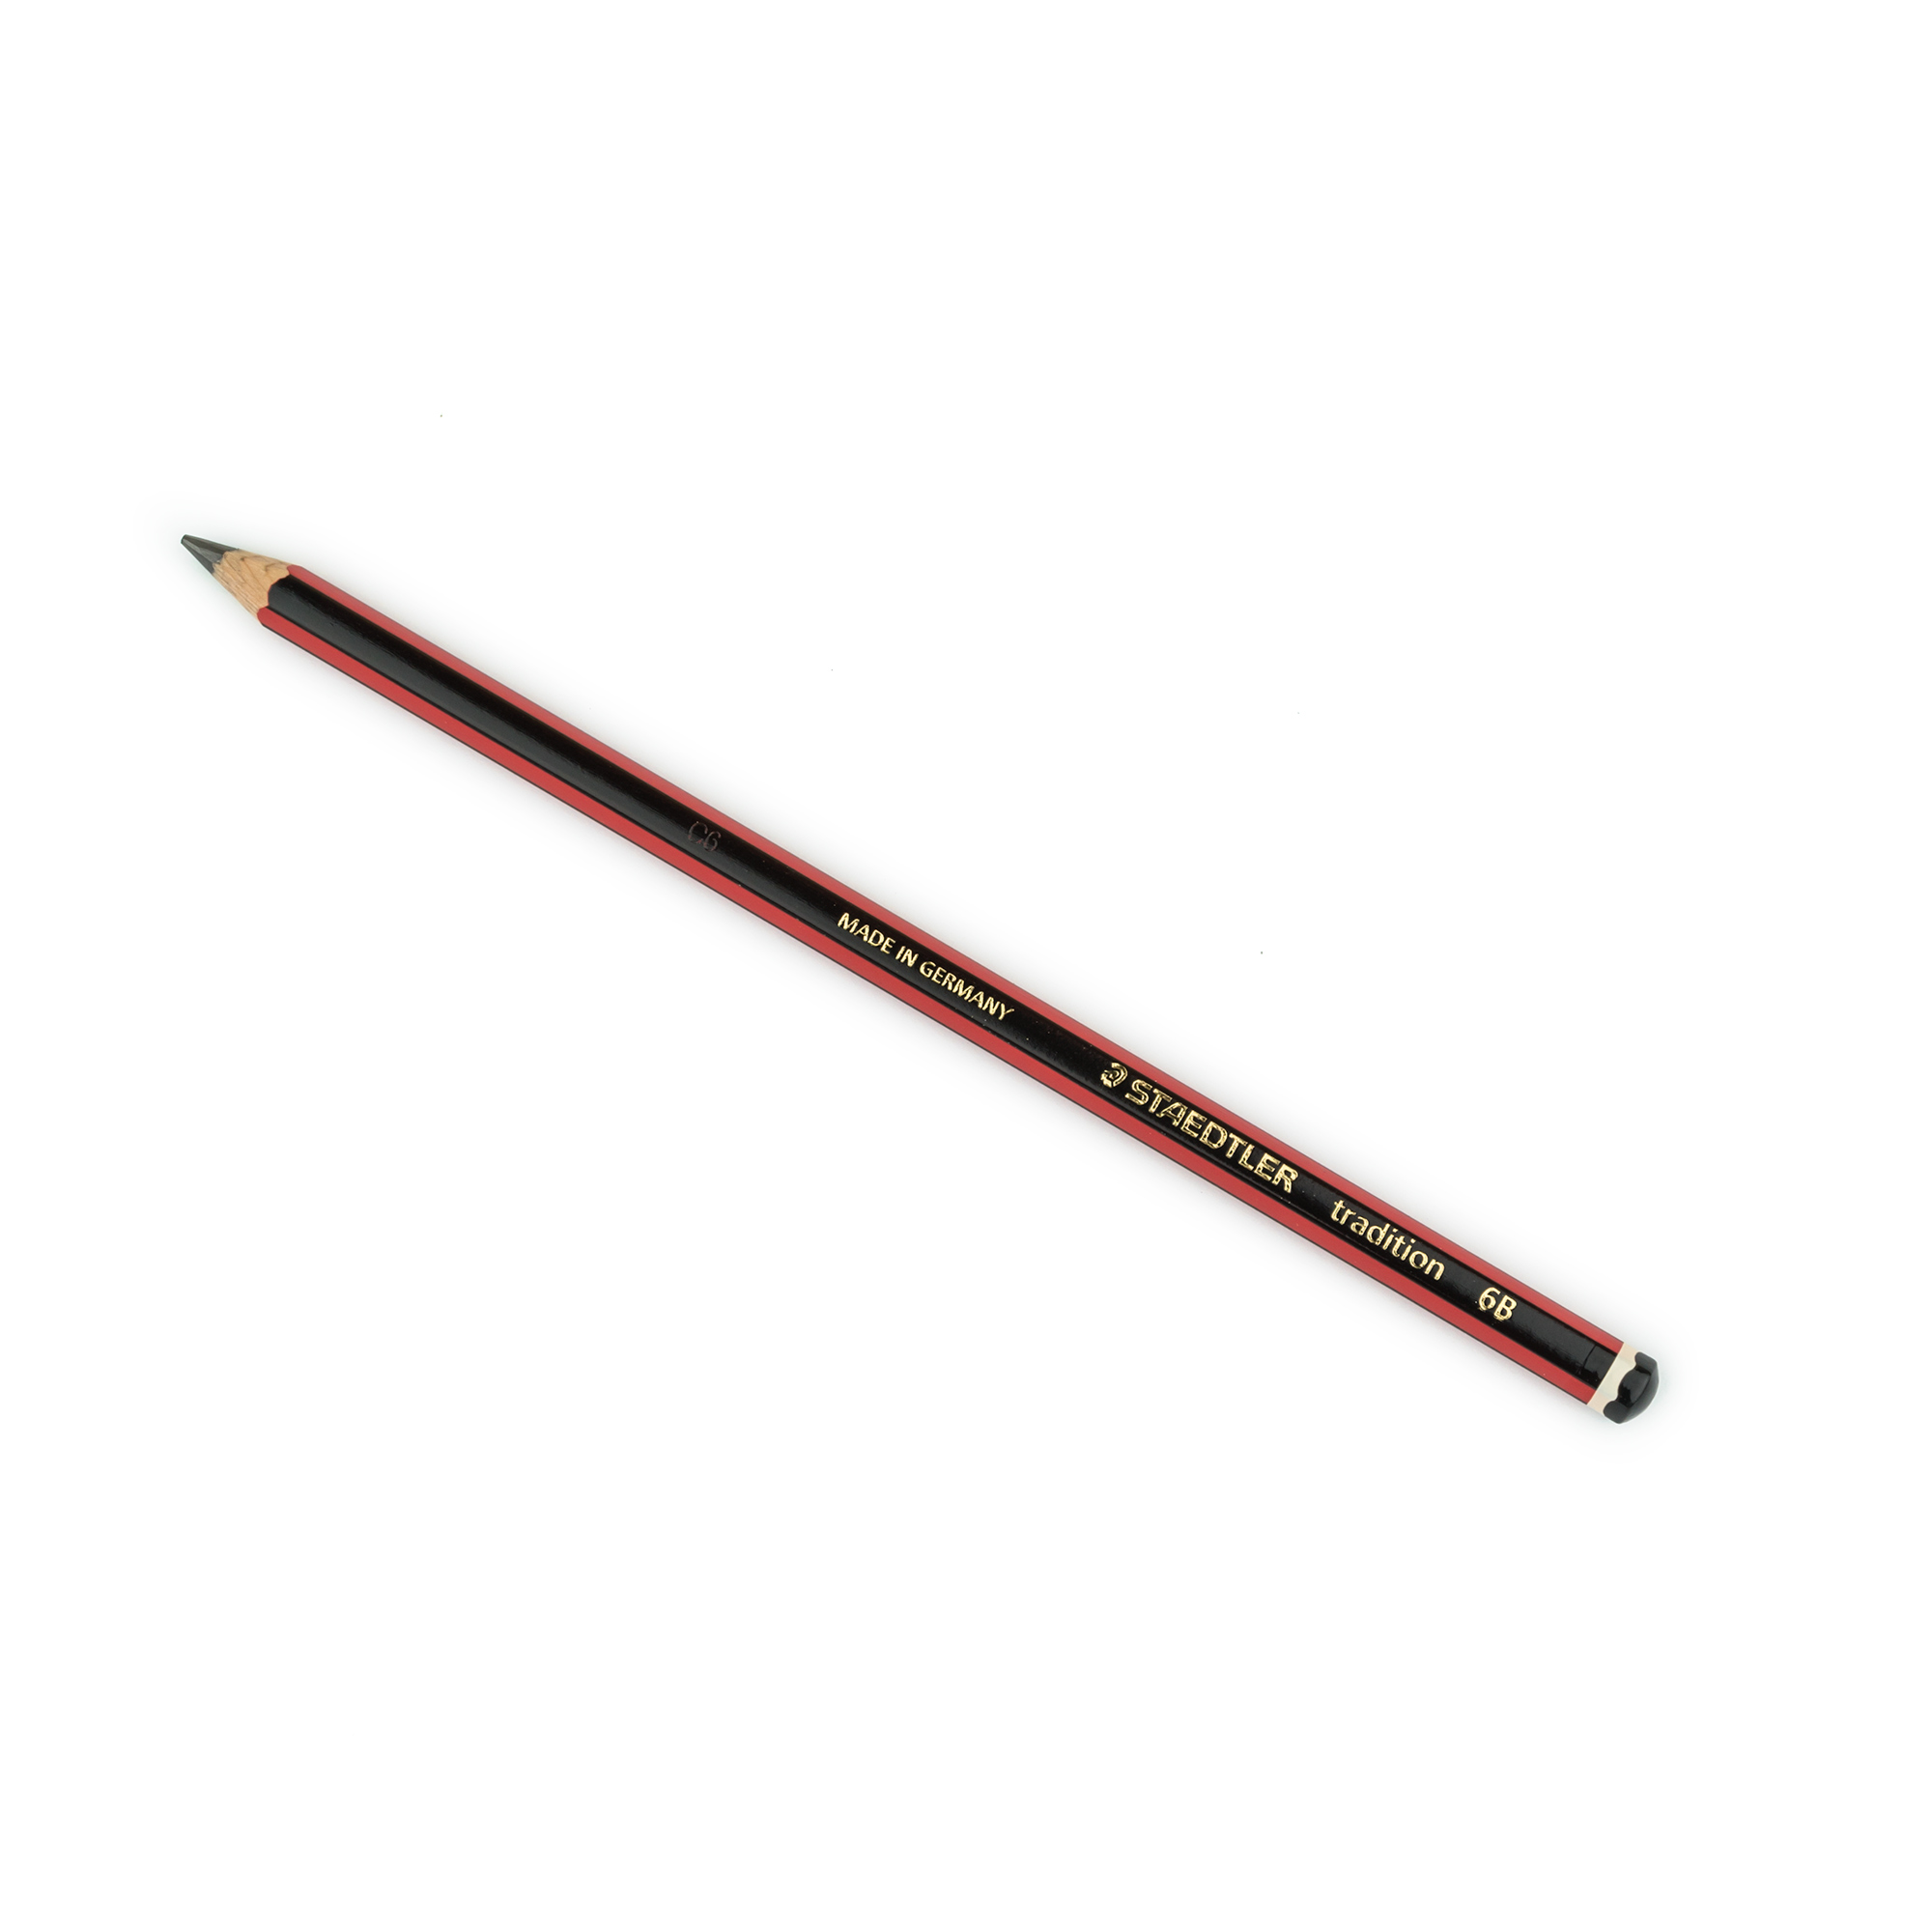 Staedtler Pencil 6B 110